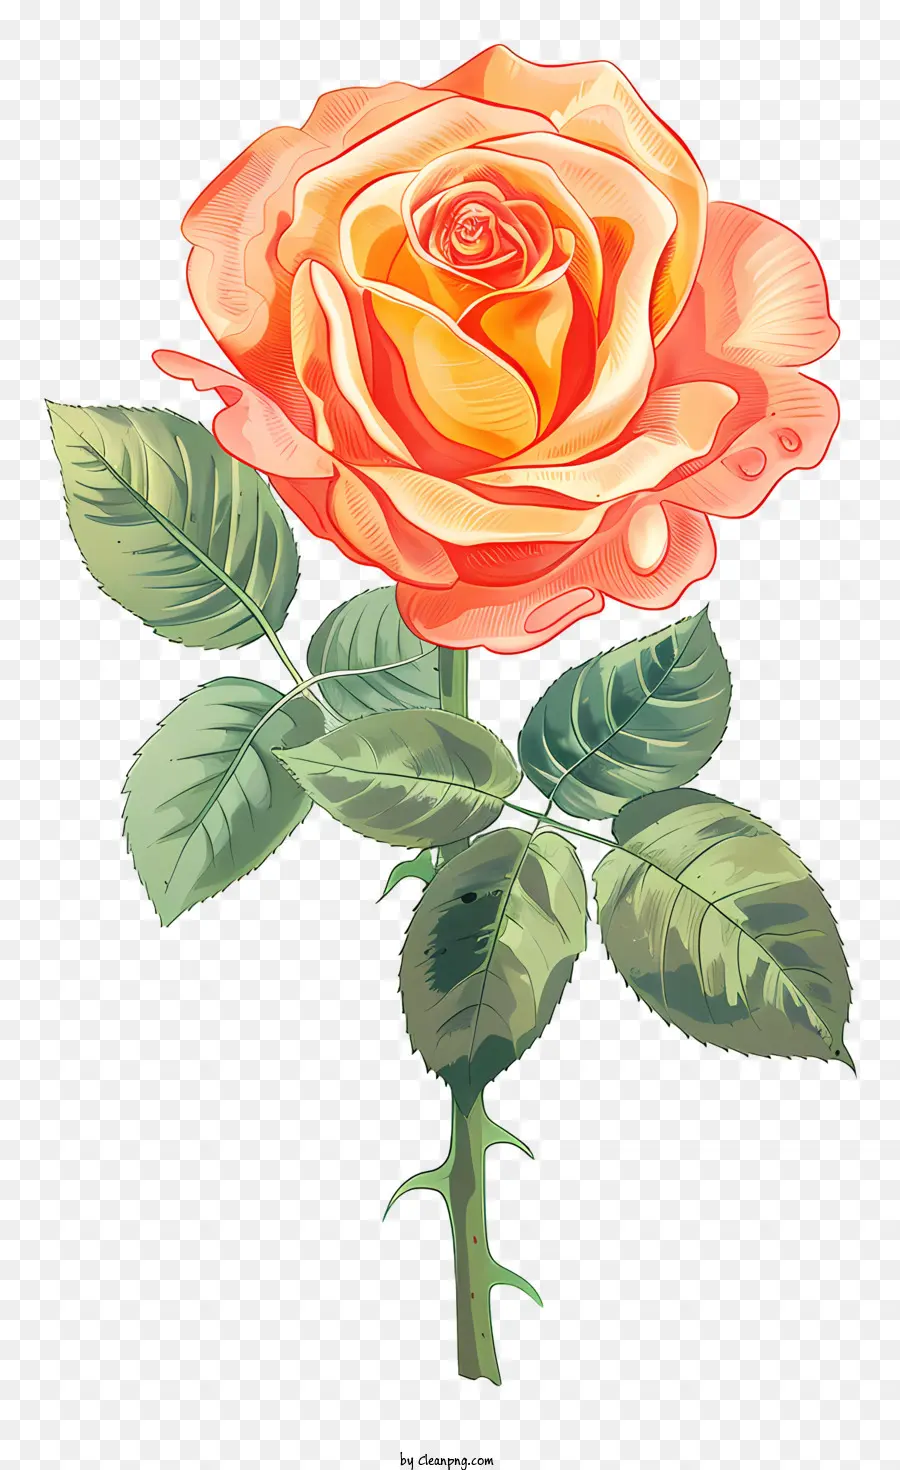 Peace Rose Orange Rose Flower Petali Stame - Singola rosa arancione con foglie verdi